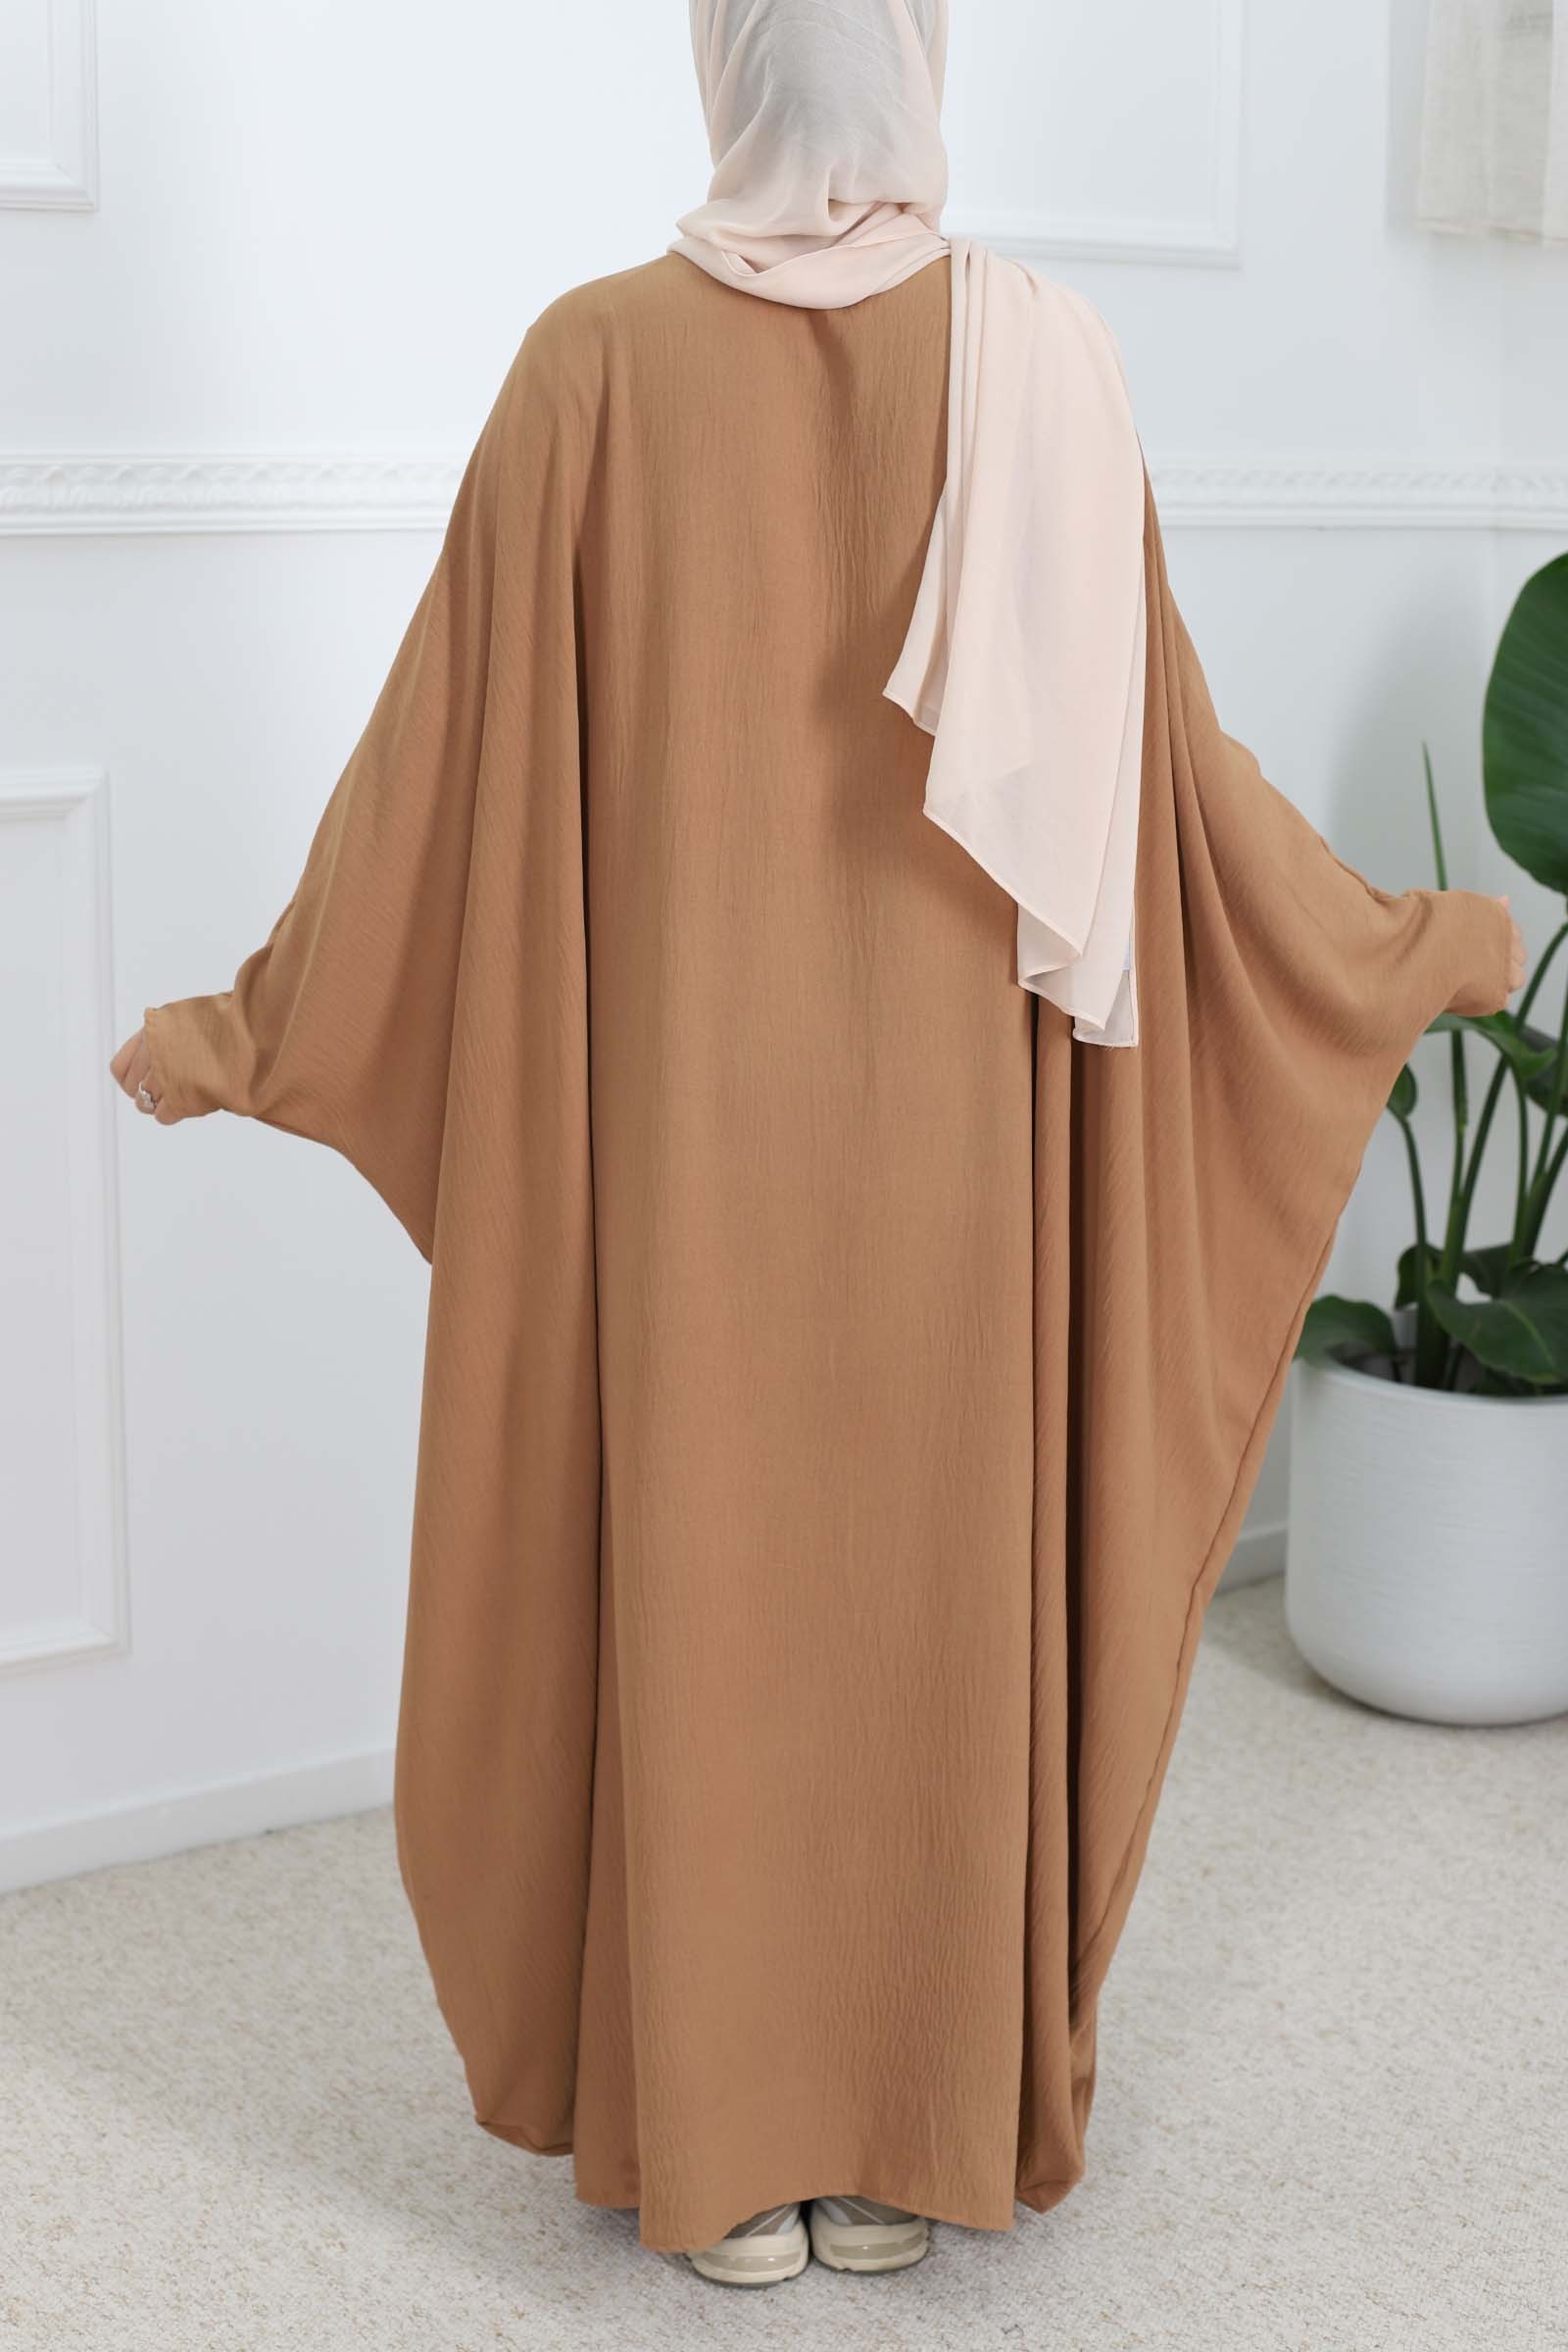 Abaya saoudienne femme petit ptix , abaya farasha pas chère , abaya